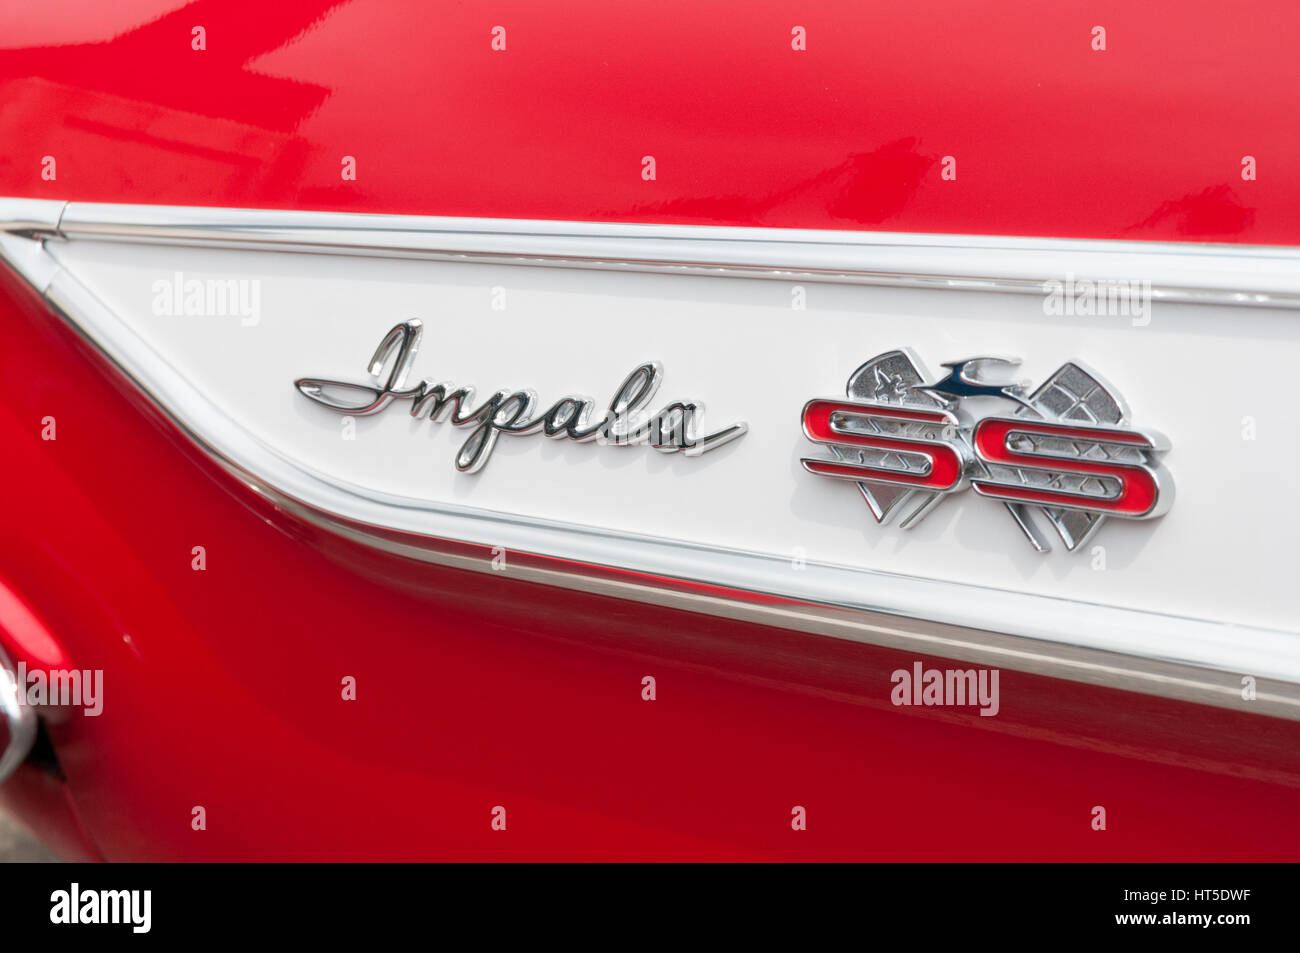 Impala Super Sport automobile logo Stock Photo